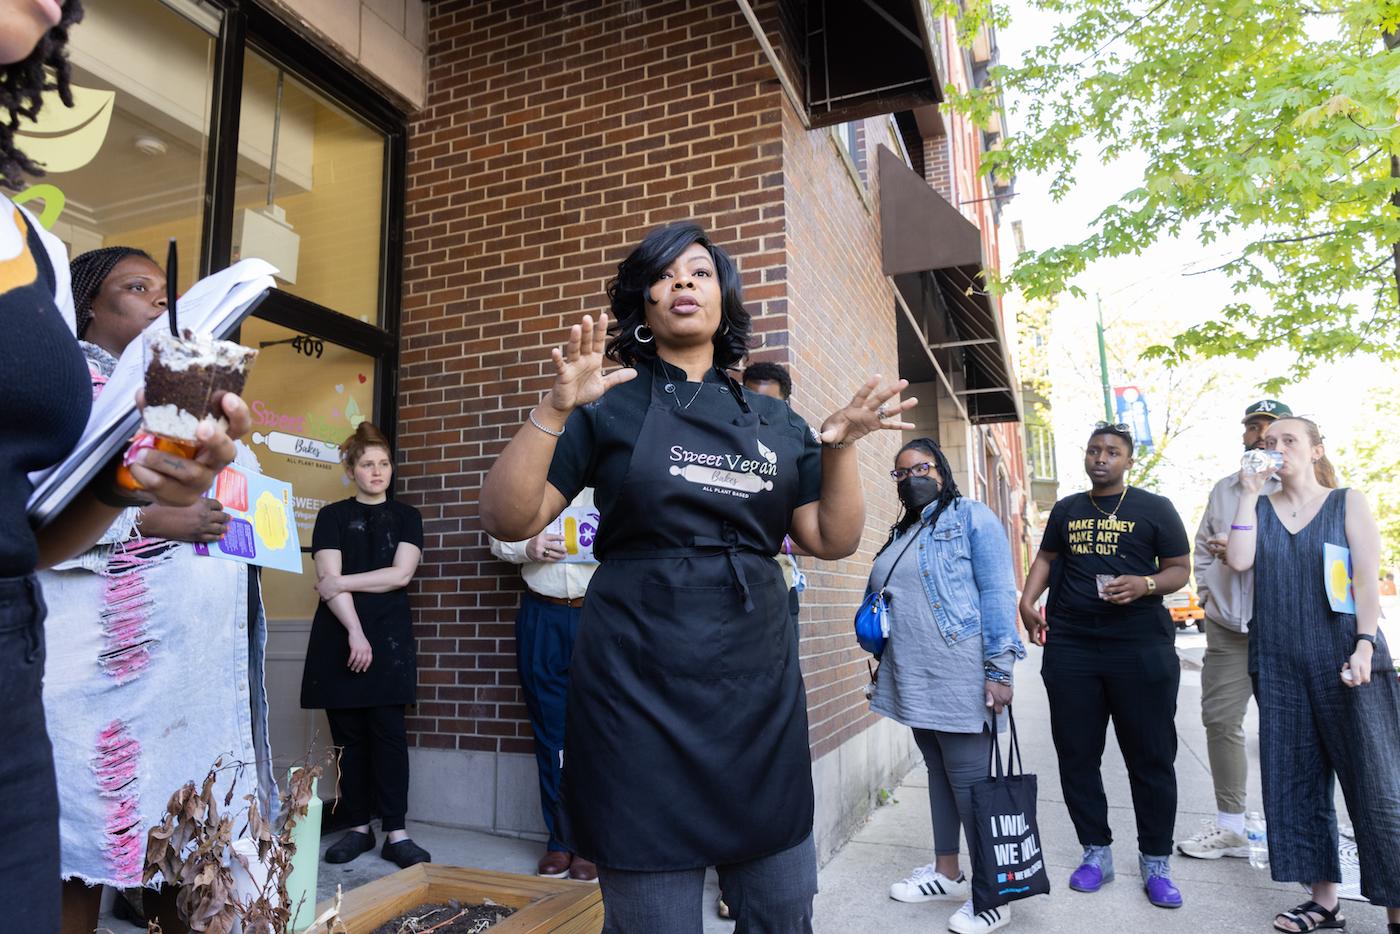 Cheryl Nelson of Sweet Vegan Bakes addresses a crowd outside her shop